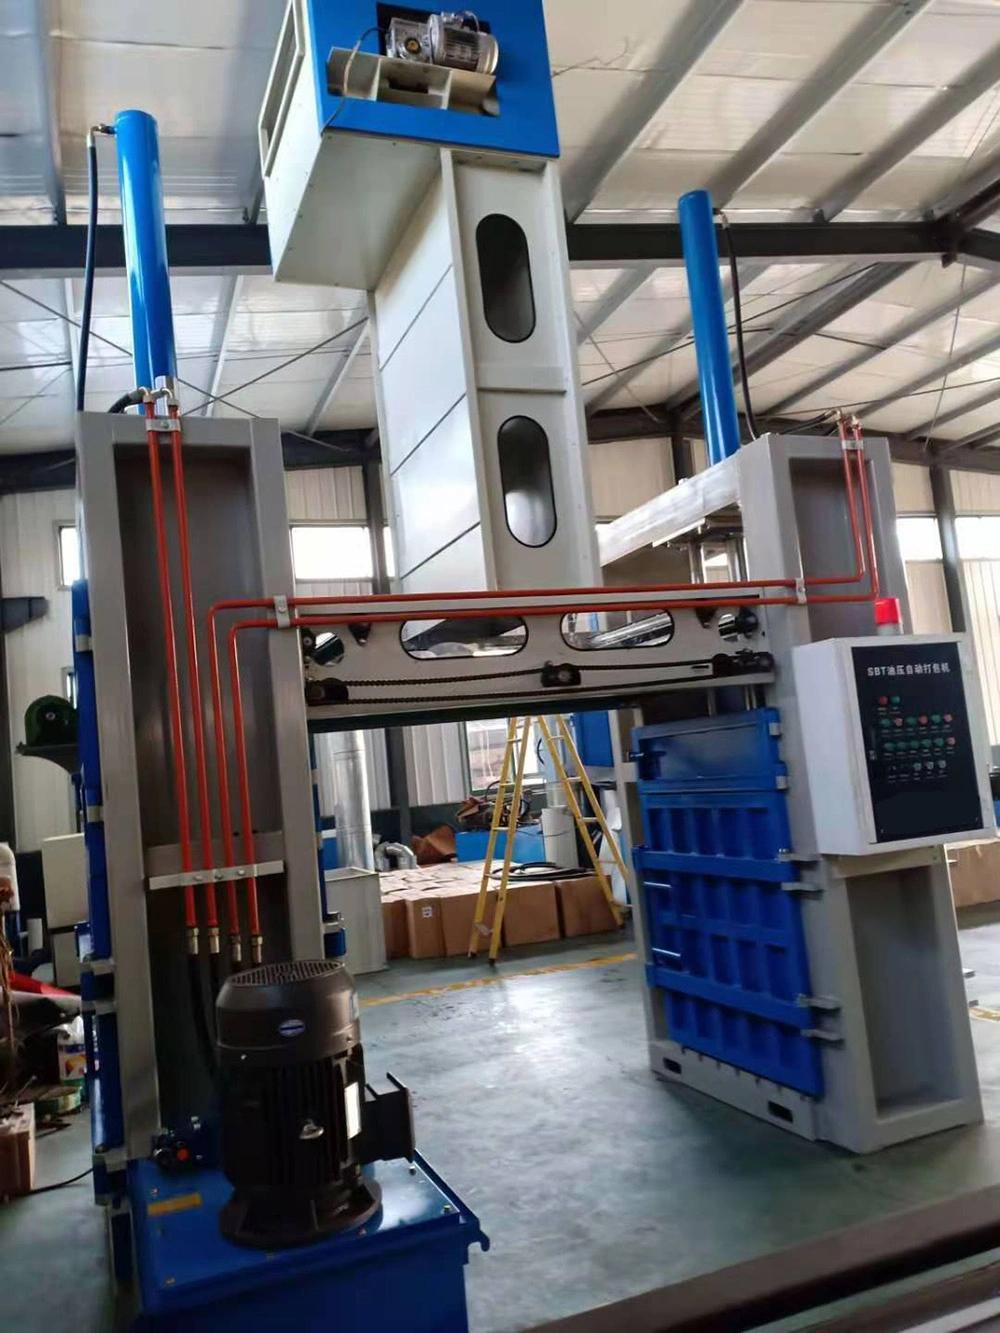 Monthly Deals Hydraulic Vertical Scrap Baler Waste Plastic Paper Press Baling Machine